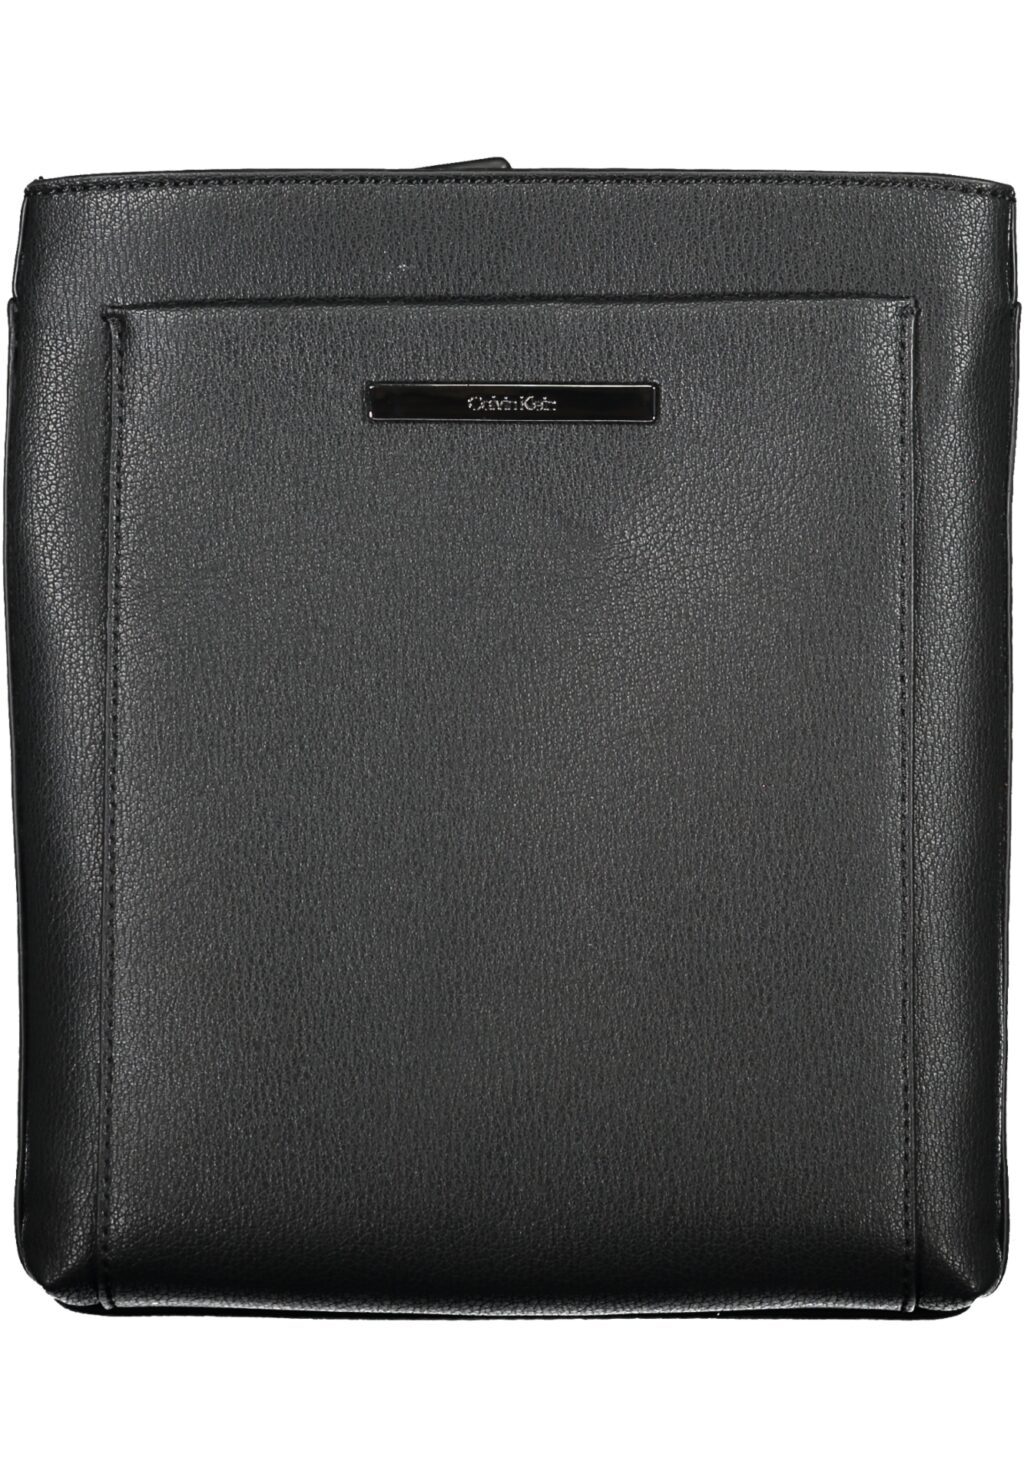 CALVIN KLEIN MEN'S BLACK SHOULDER BAG K50K510803_NEBAX